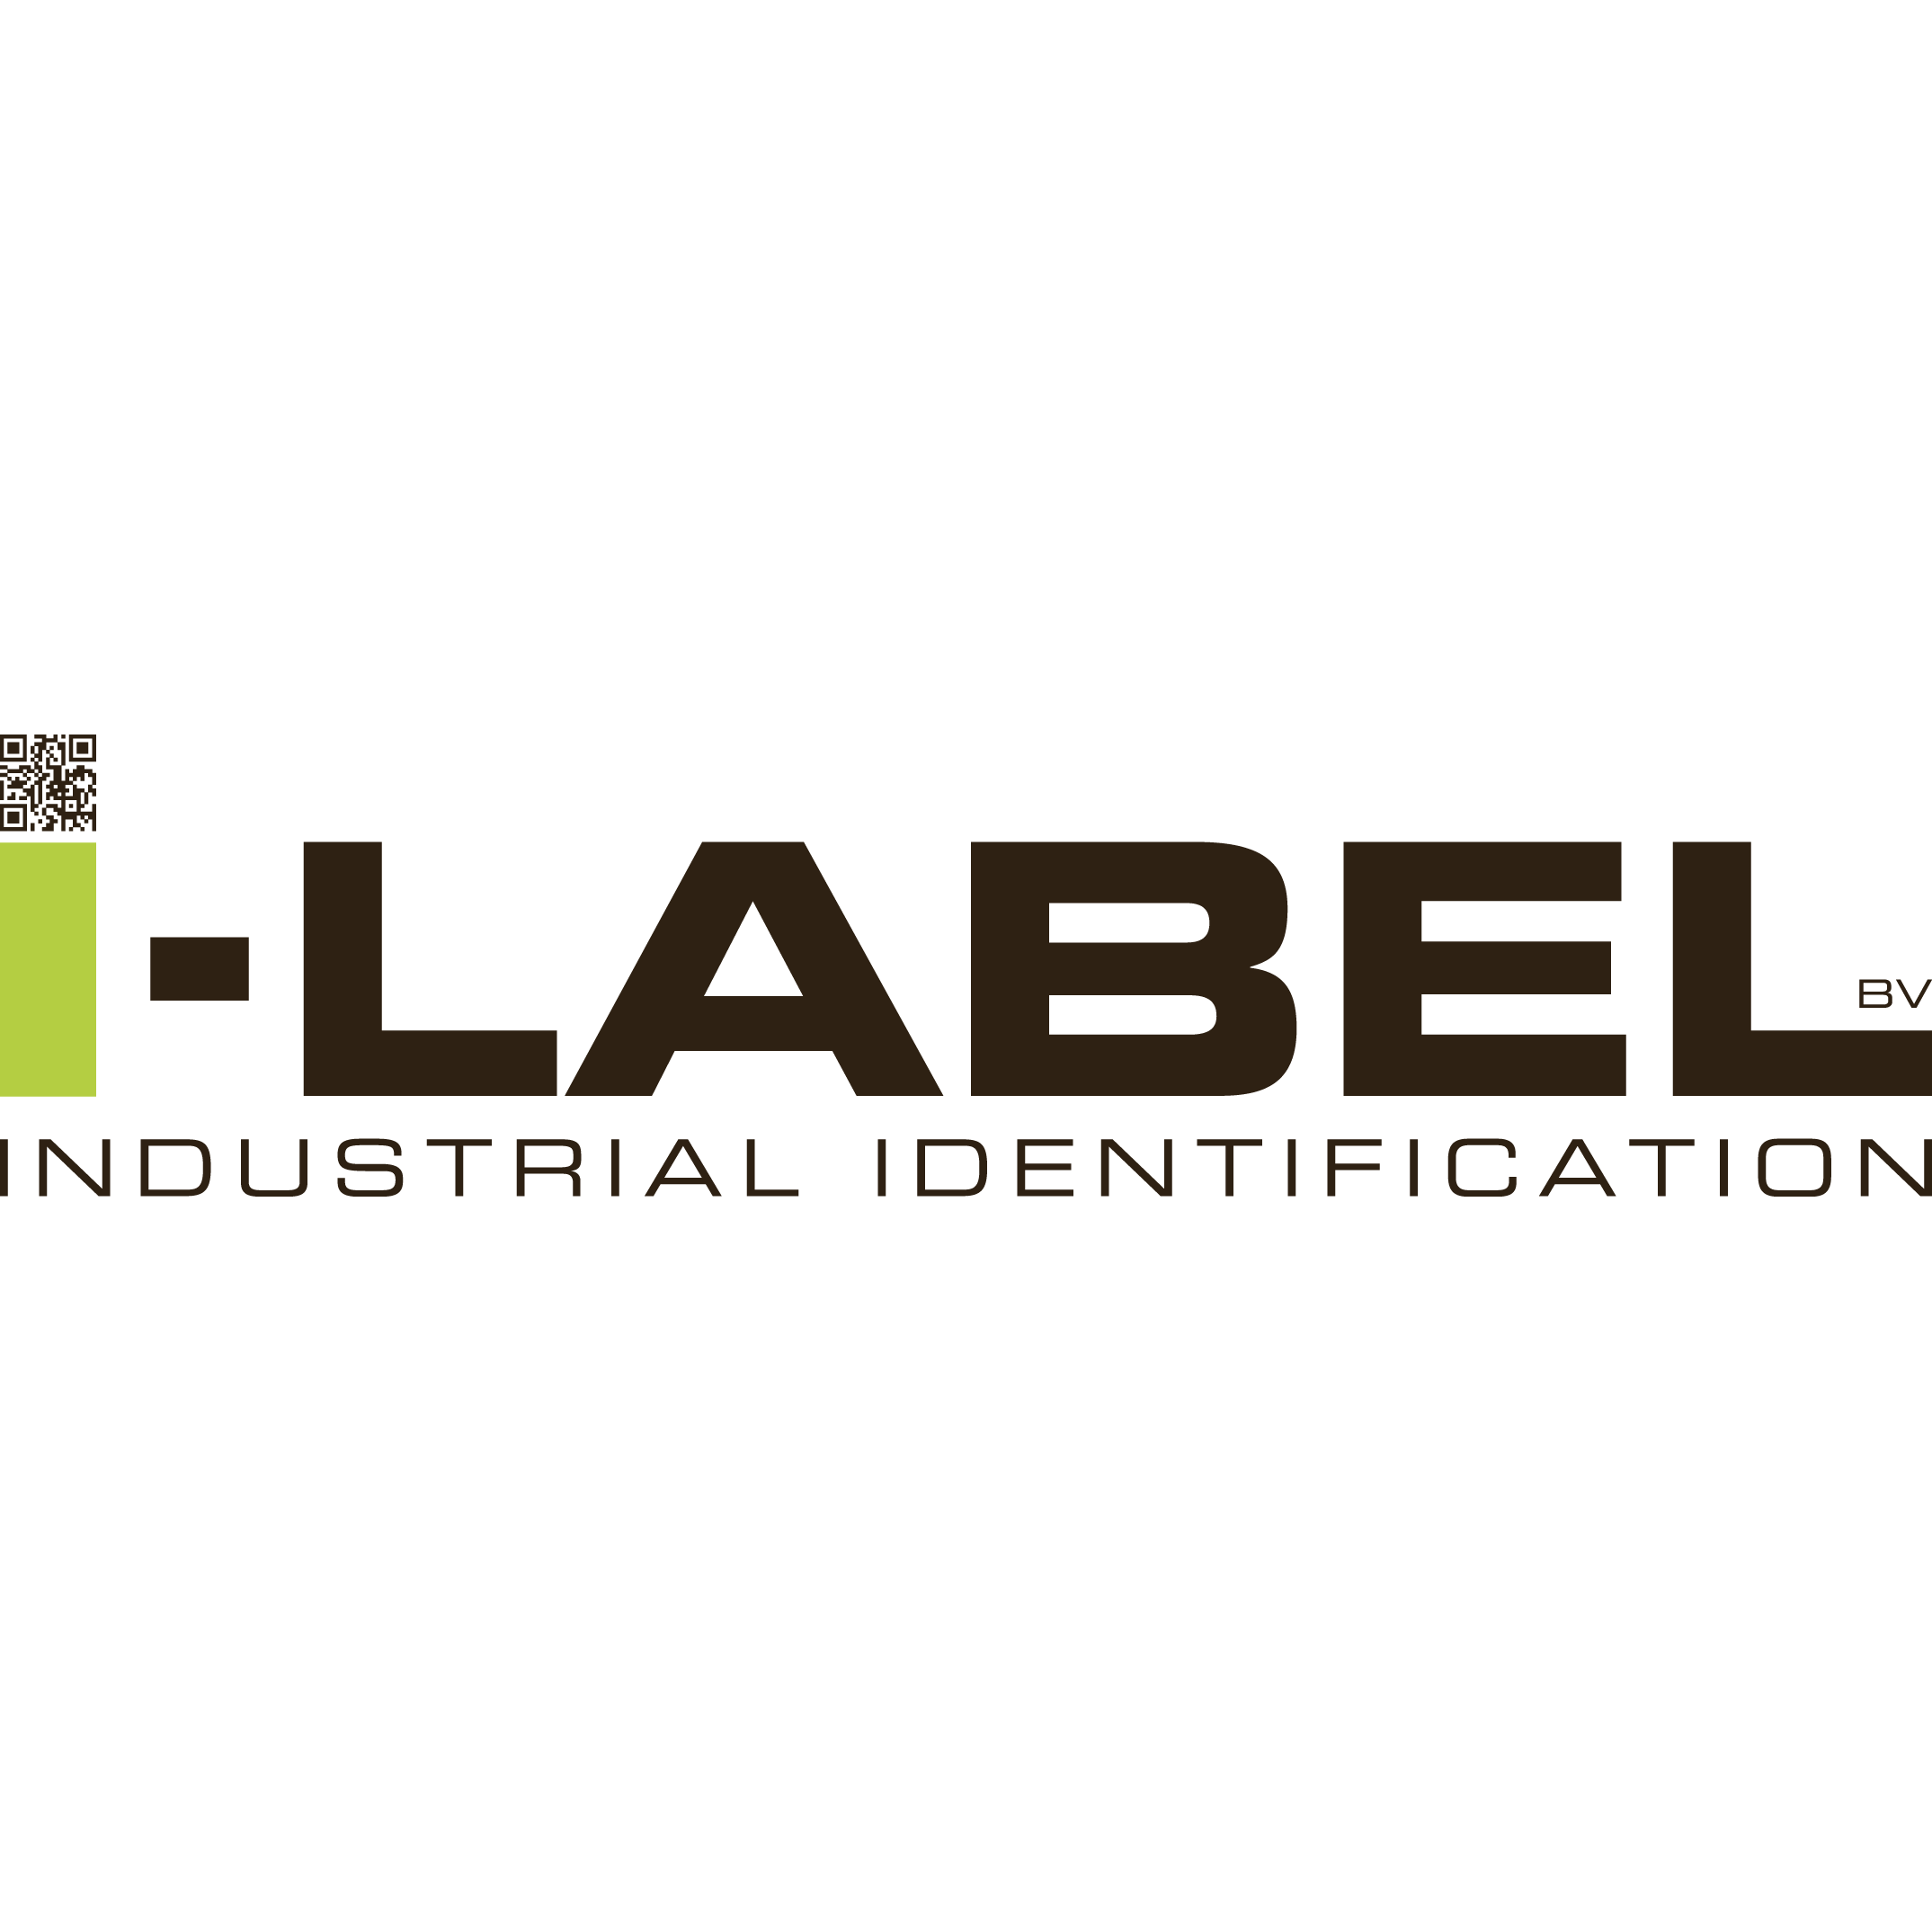 I-Label BVBA